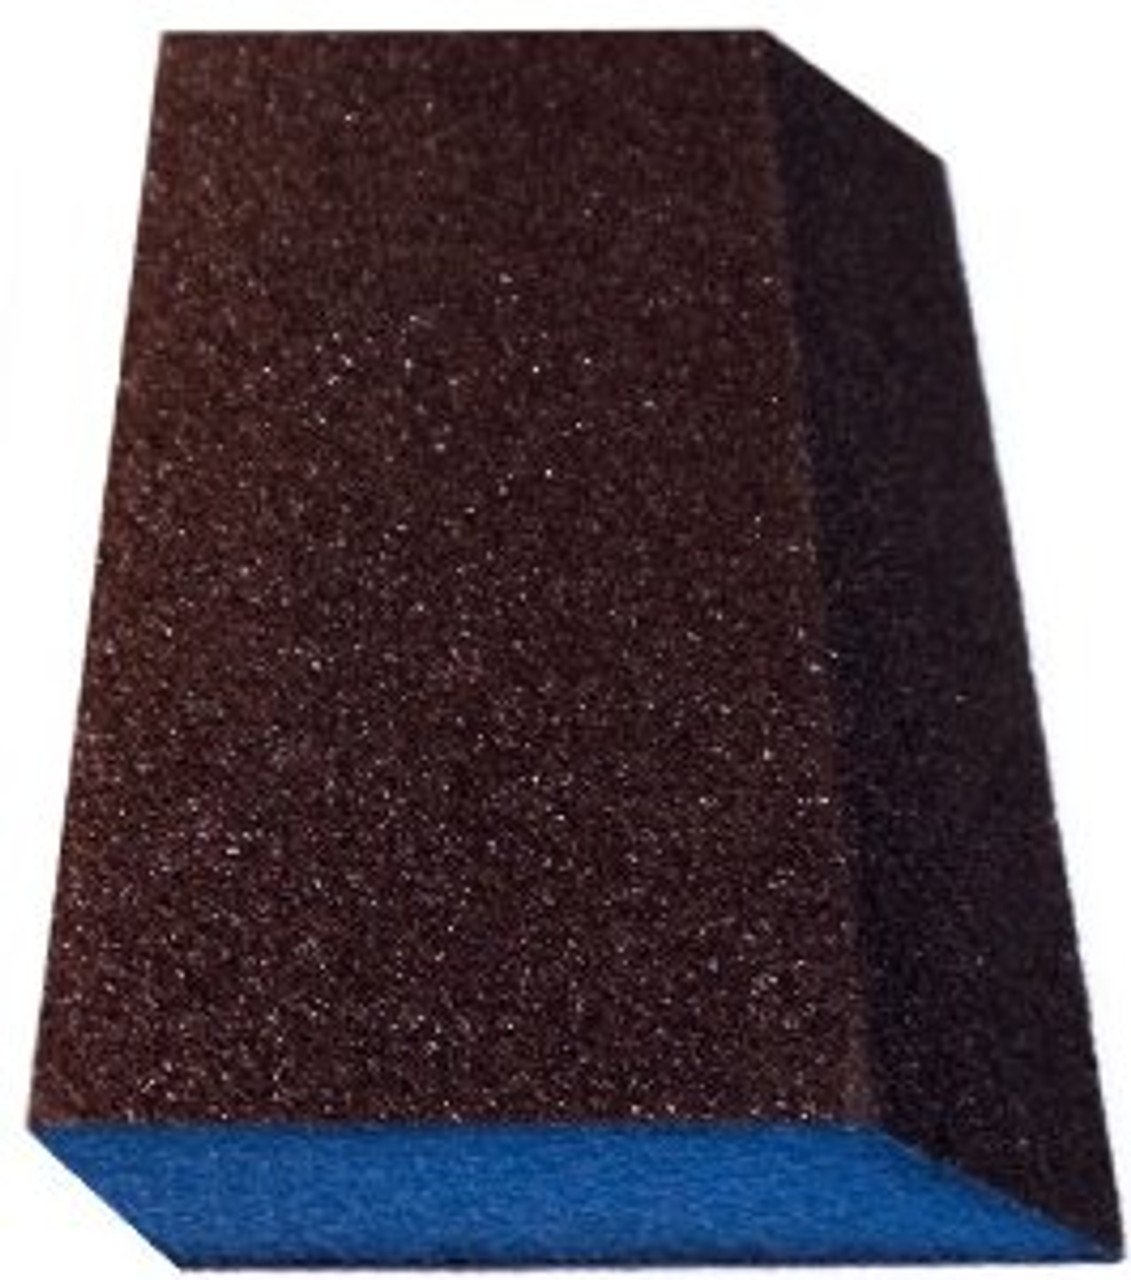  Dual Angle Drywall Sanding Sponges - Medium/Fine Dual